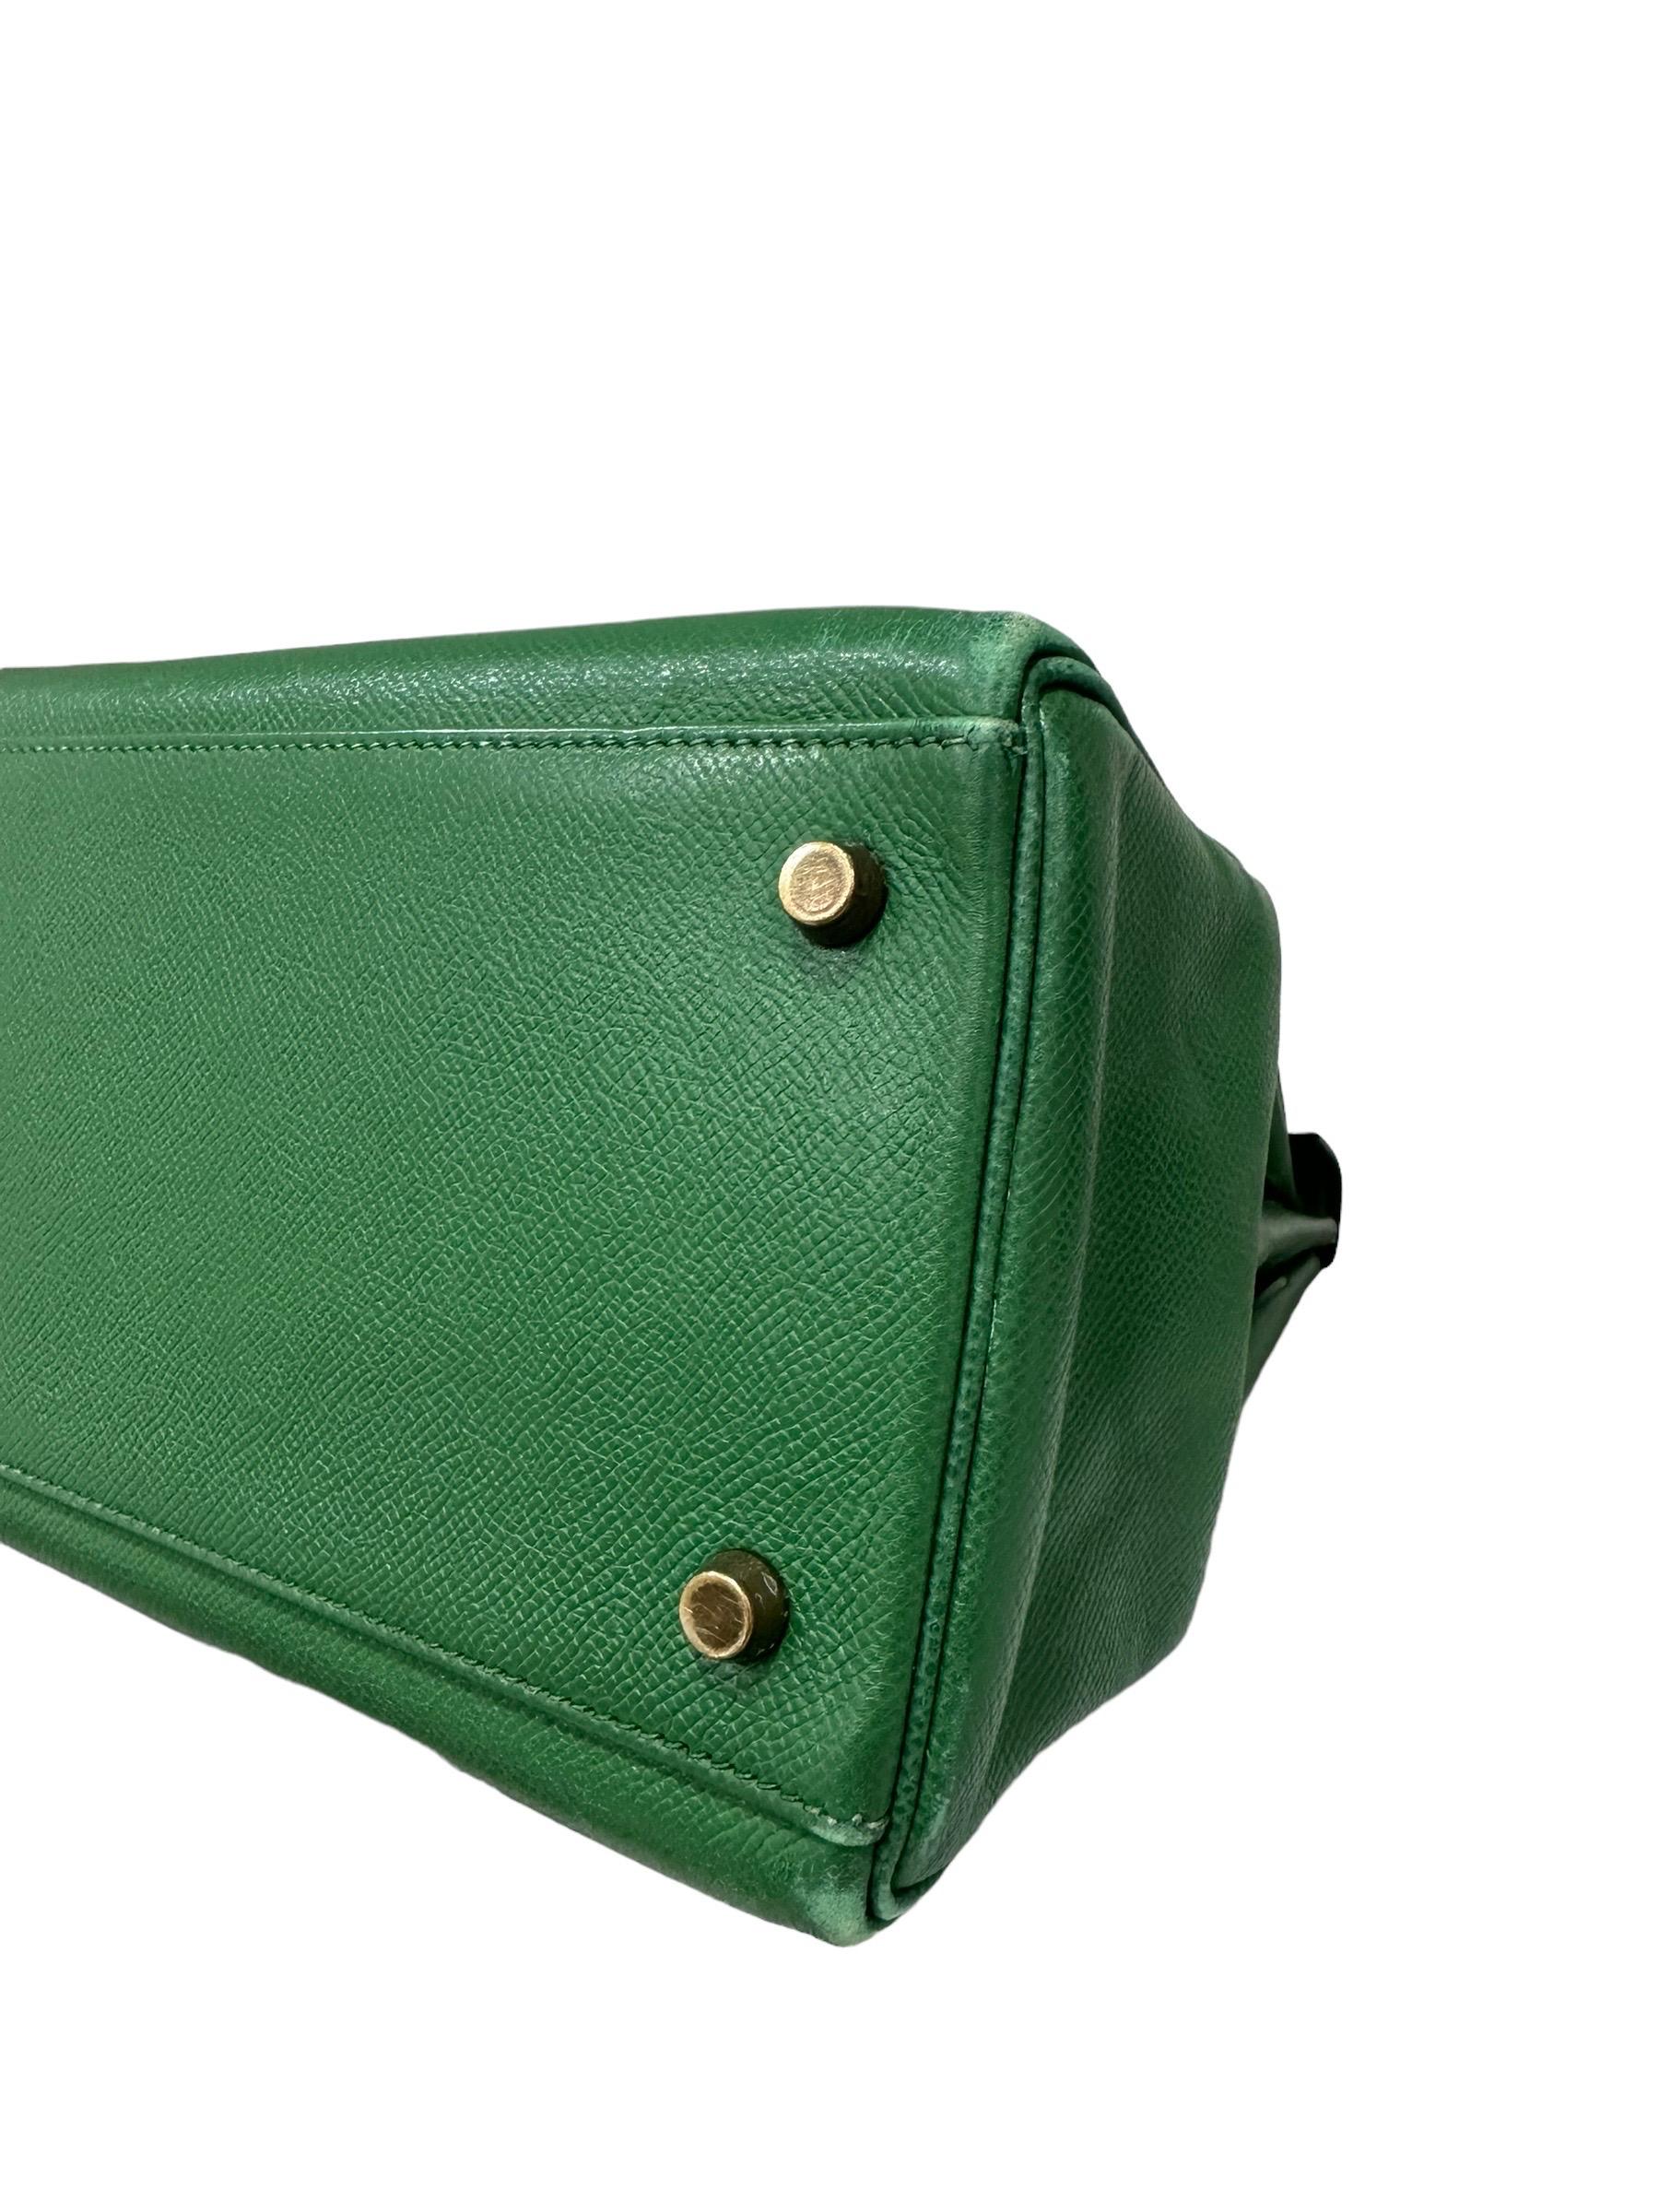 Hermès Kelly 35 Epsom Leather Vert Bengale Top Handle Bag 1